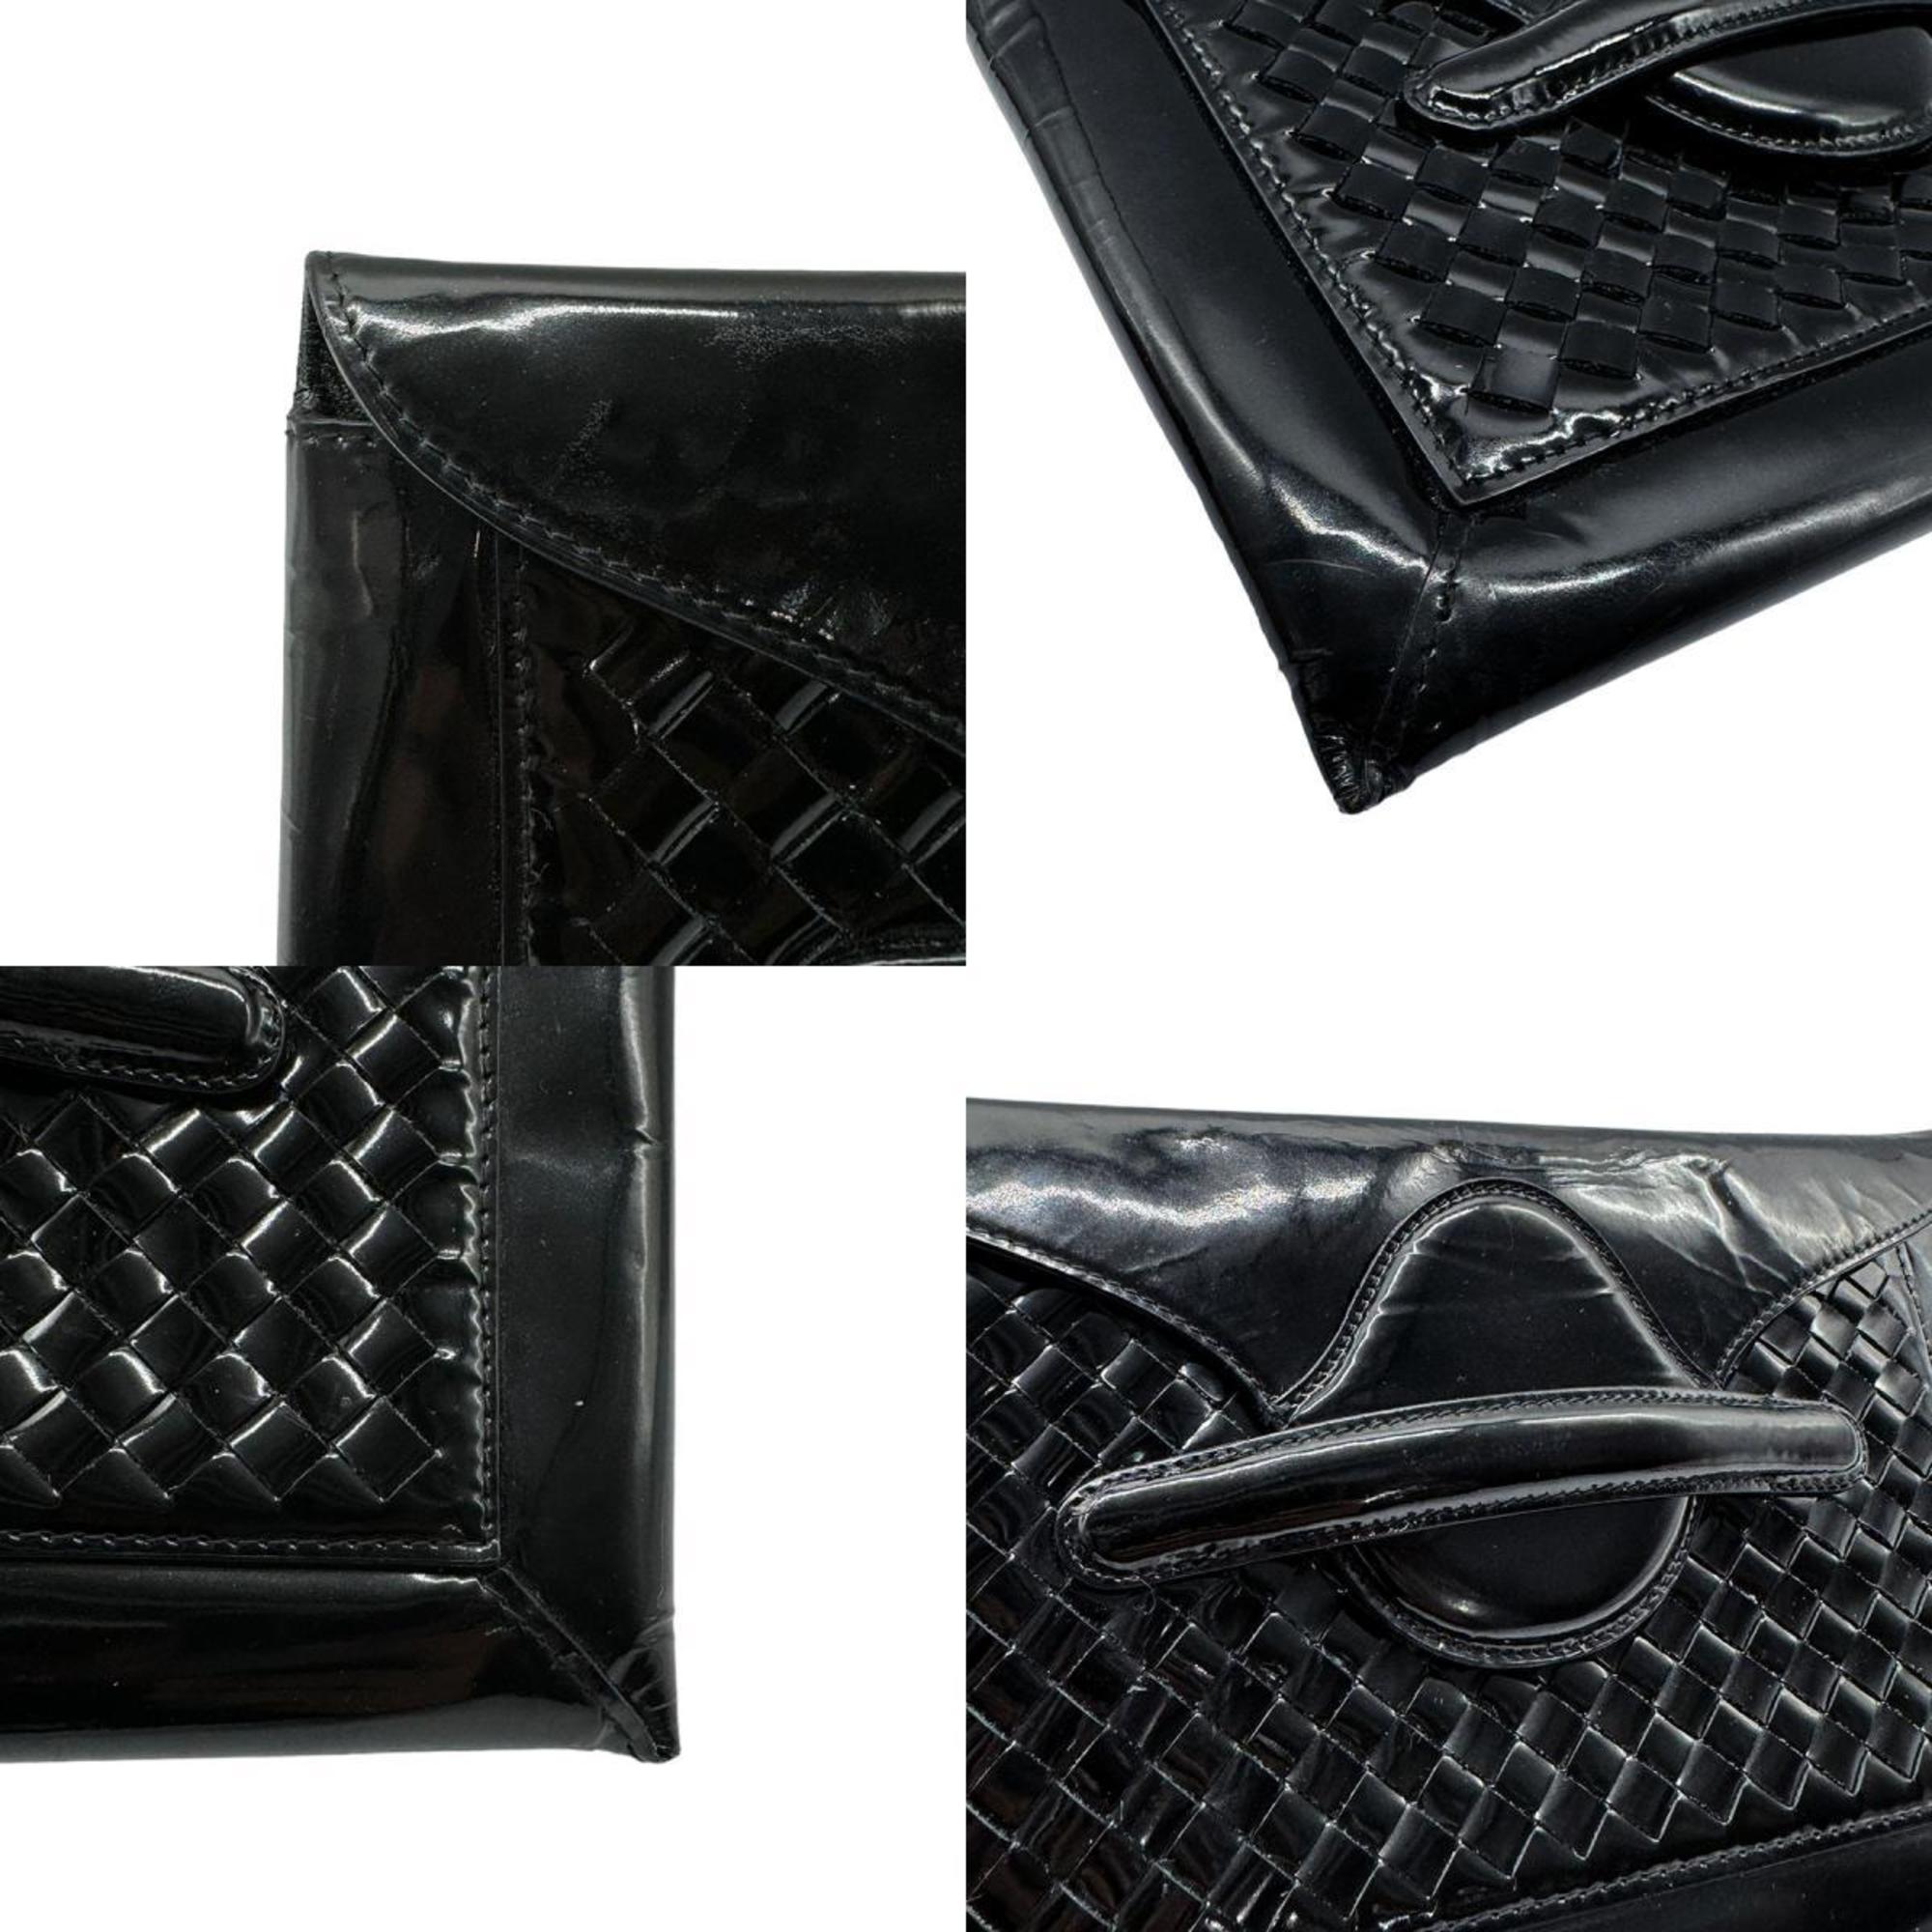 BOTTEGA VENETA Clutch Bag Intrecciato Patent Leather Black Unisex z0507